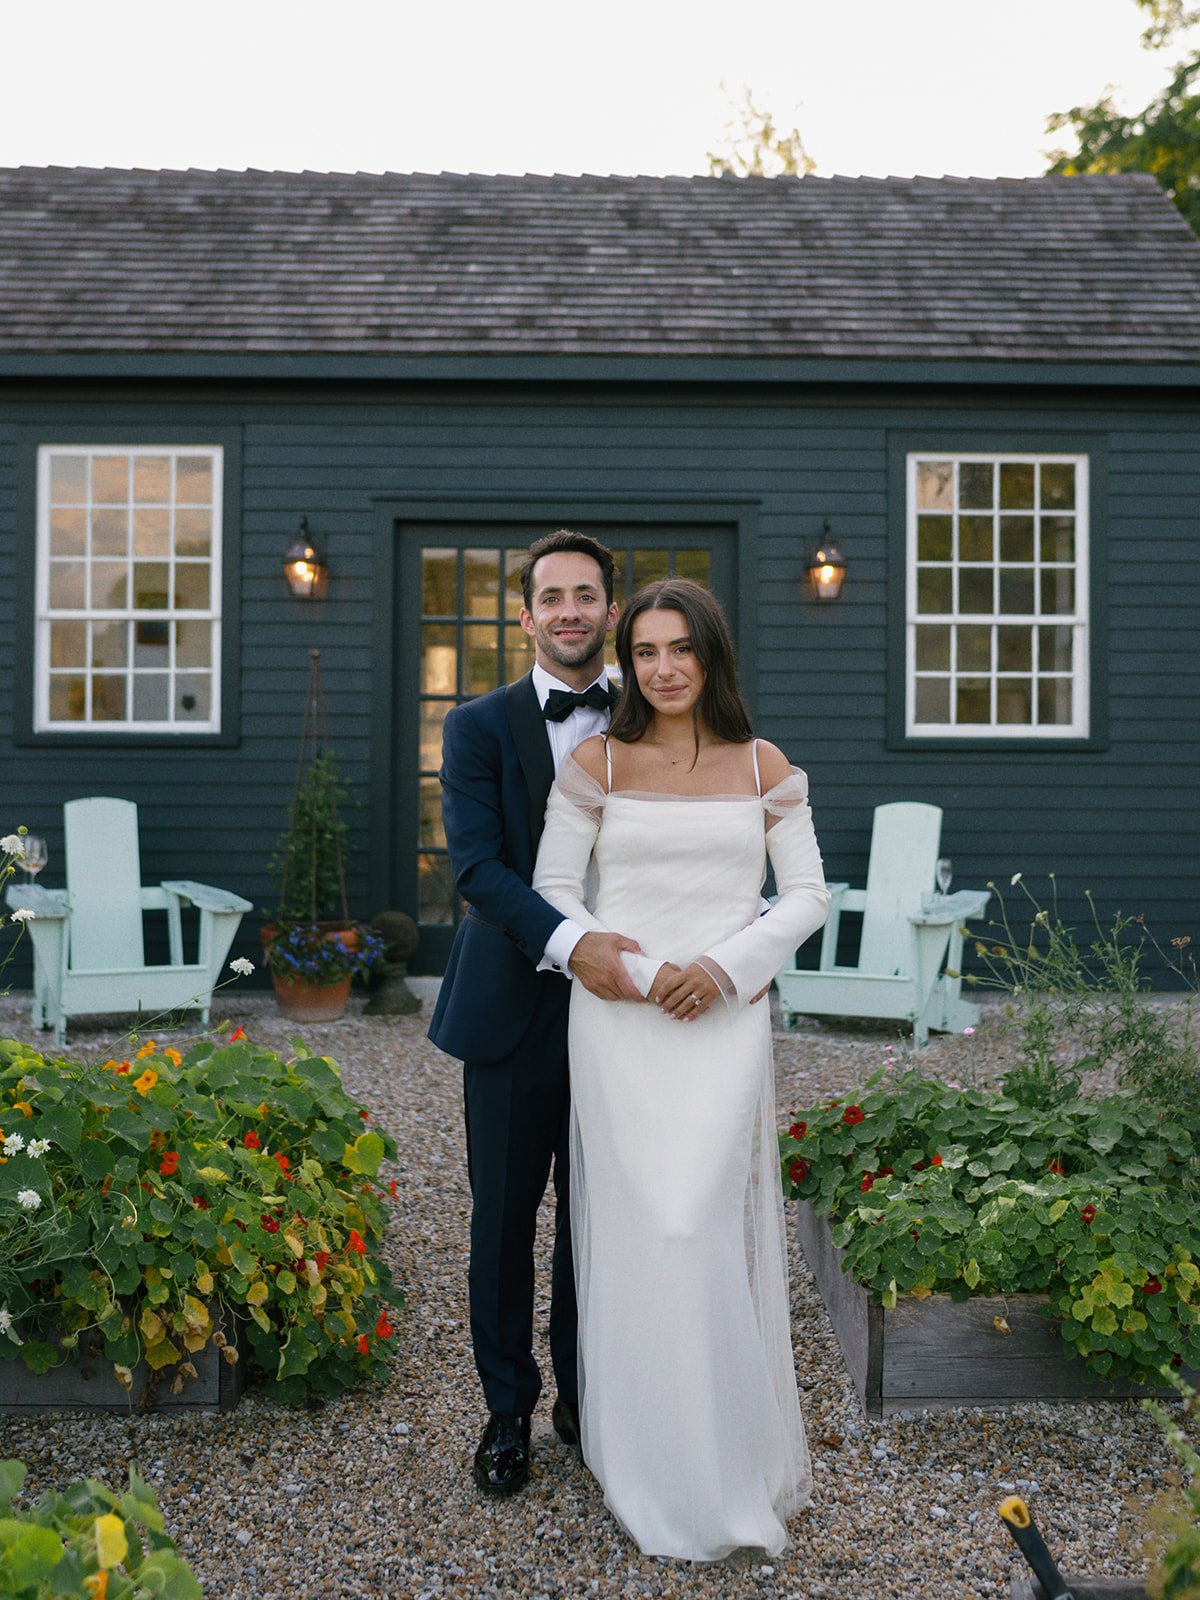 Best-Berkshires-Wedding-Photographer-Inn-Kenmore-Hall-35mm-Film-Austin-178.jpg